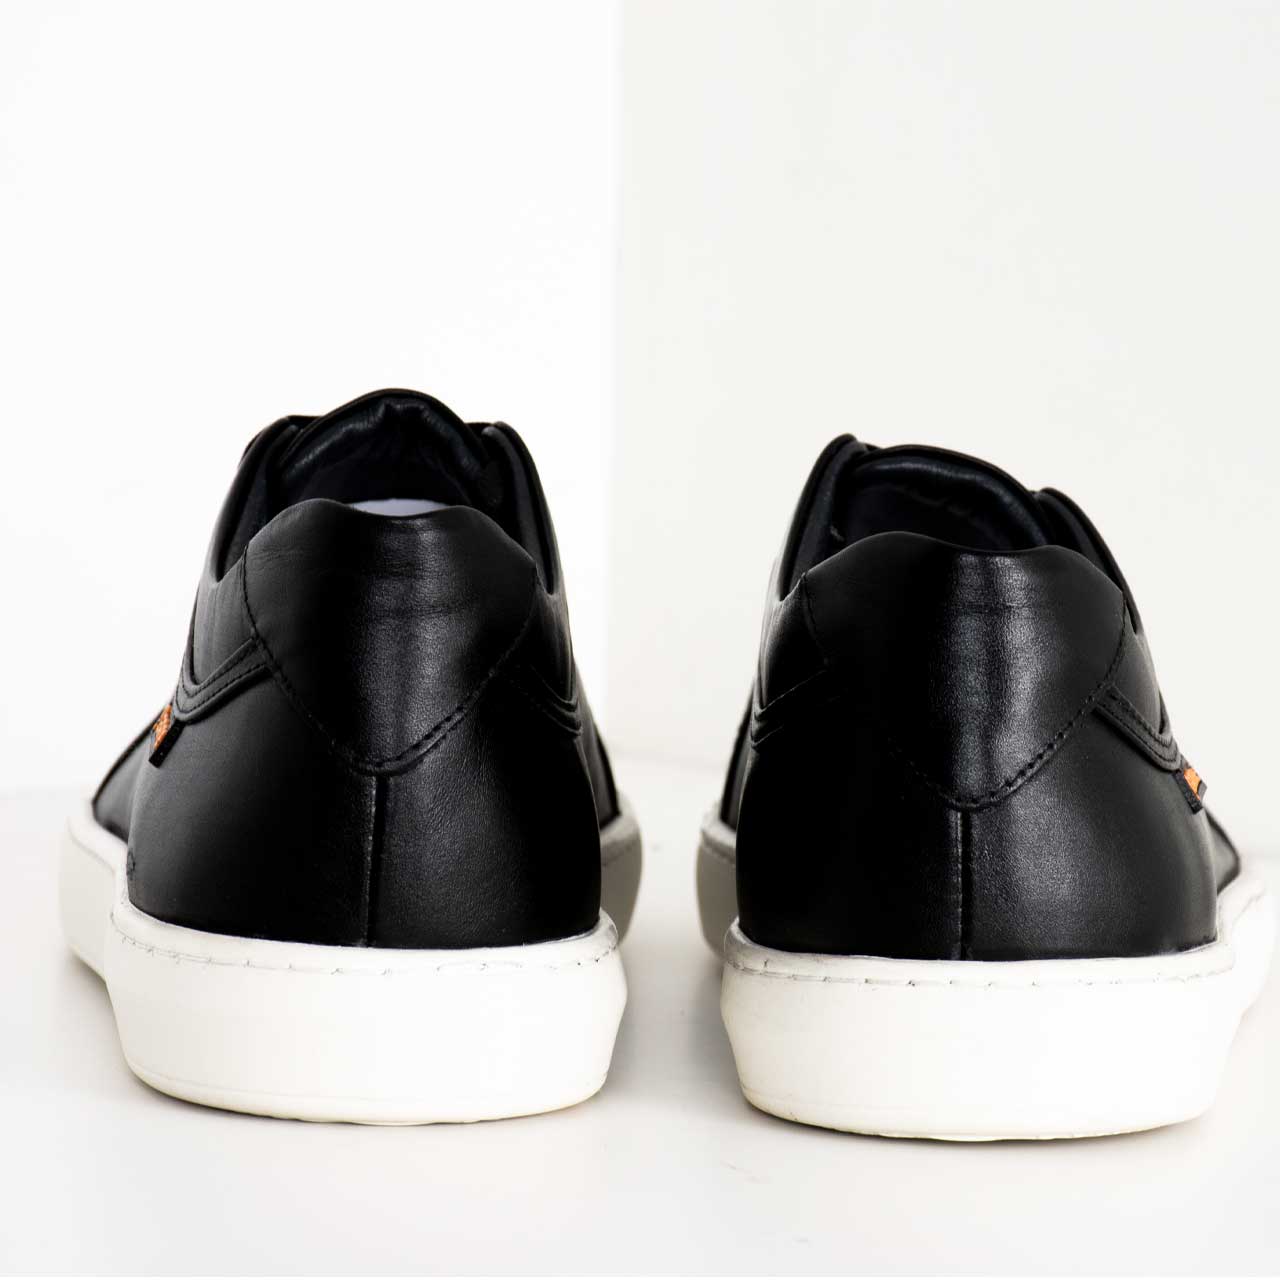 PARINECHARM leather men's casual shoes , SHO219 Model